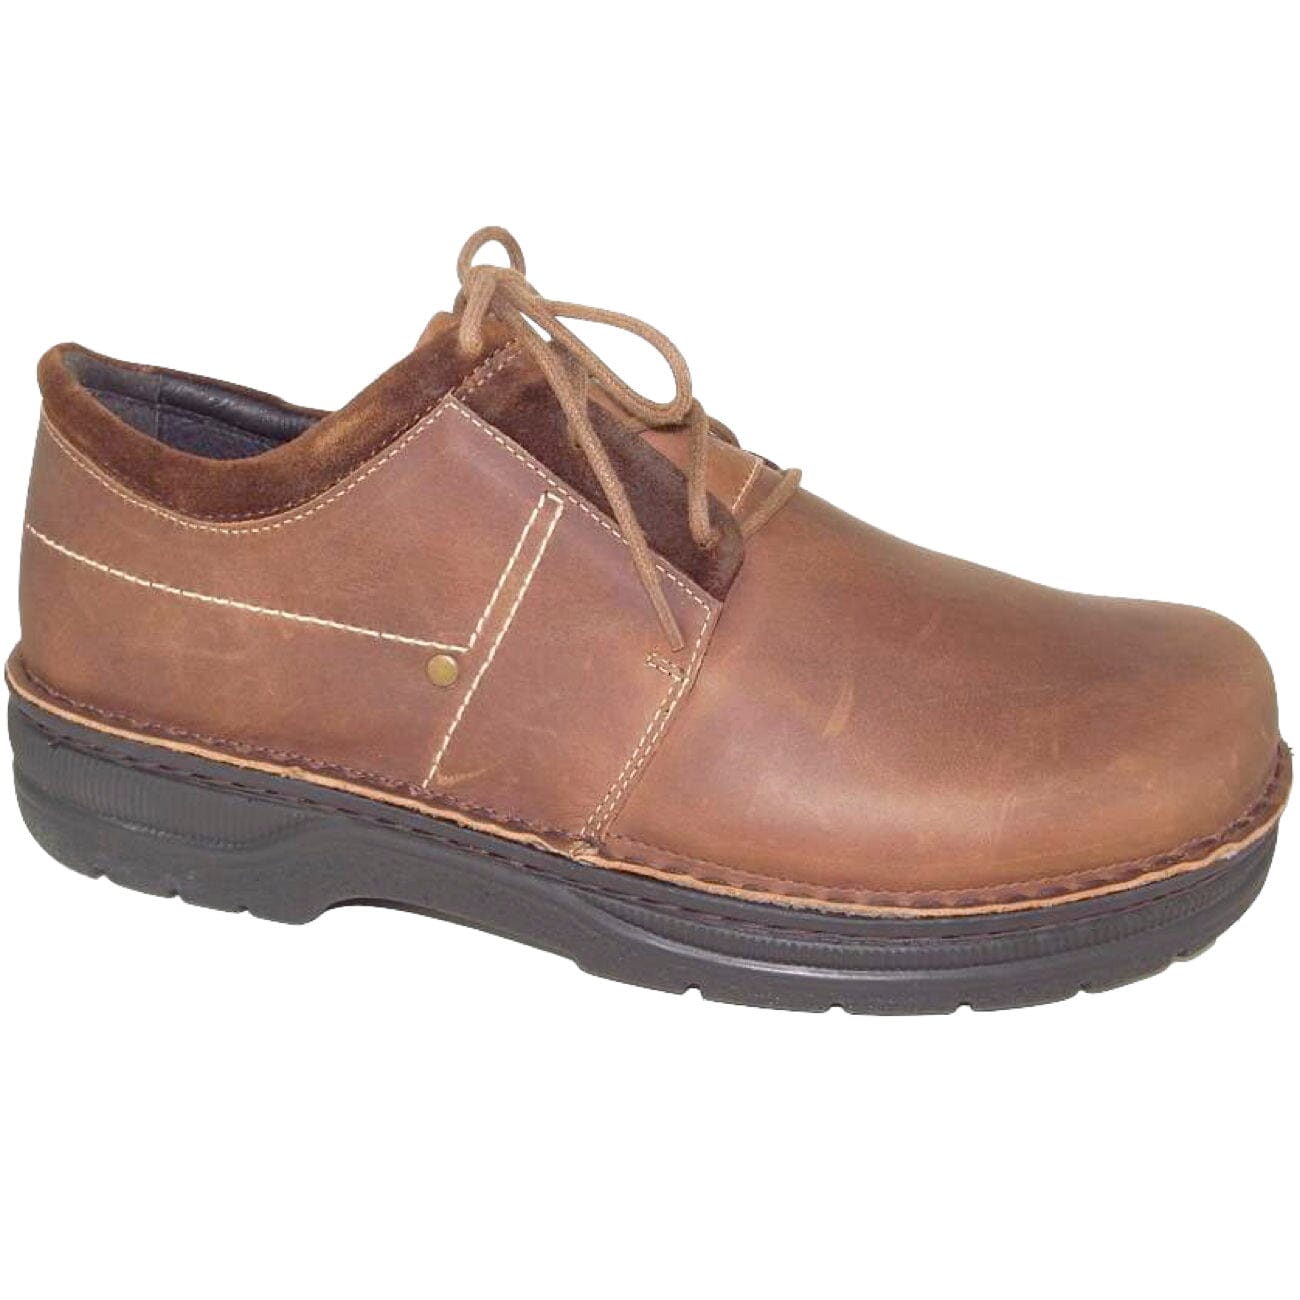 Naot Luke Leather Mens Shoe Saddle Brown Combo Shoes Naot 41 Saddle Brown Combo 